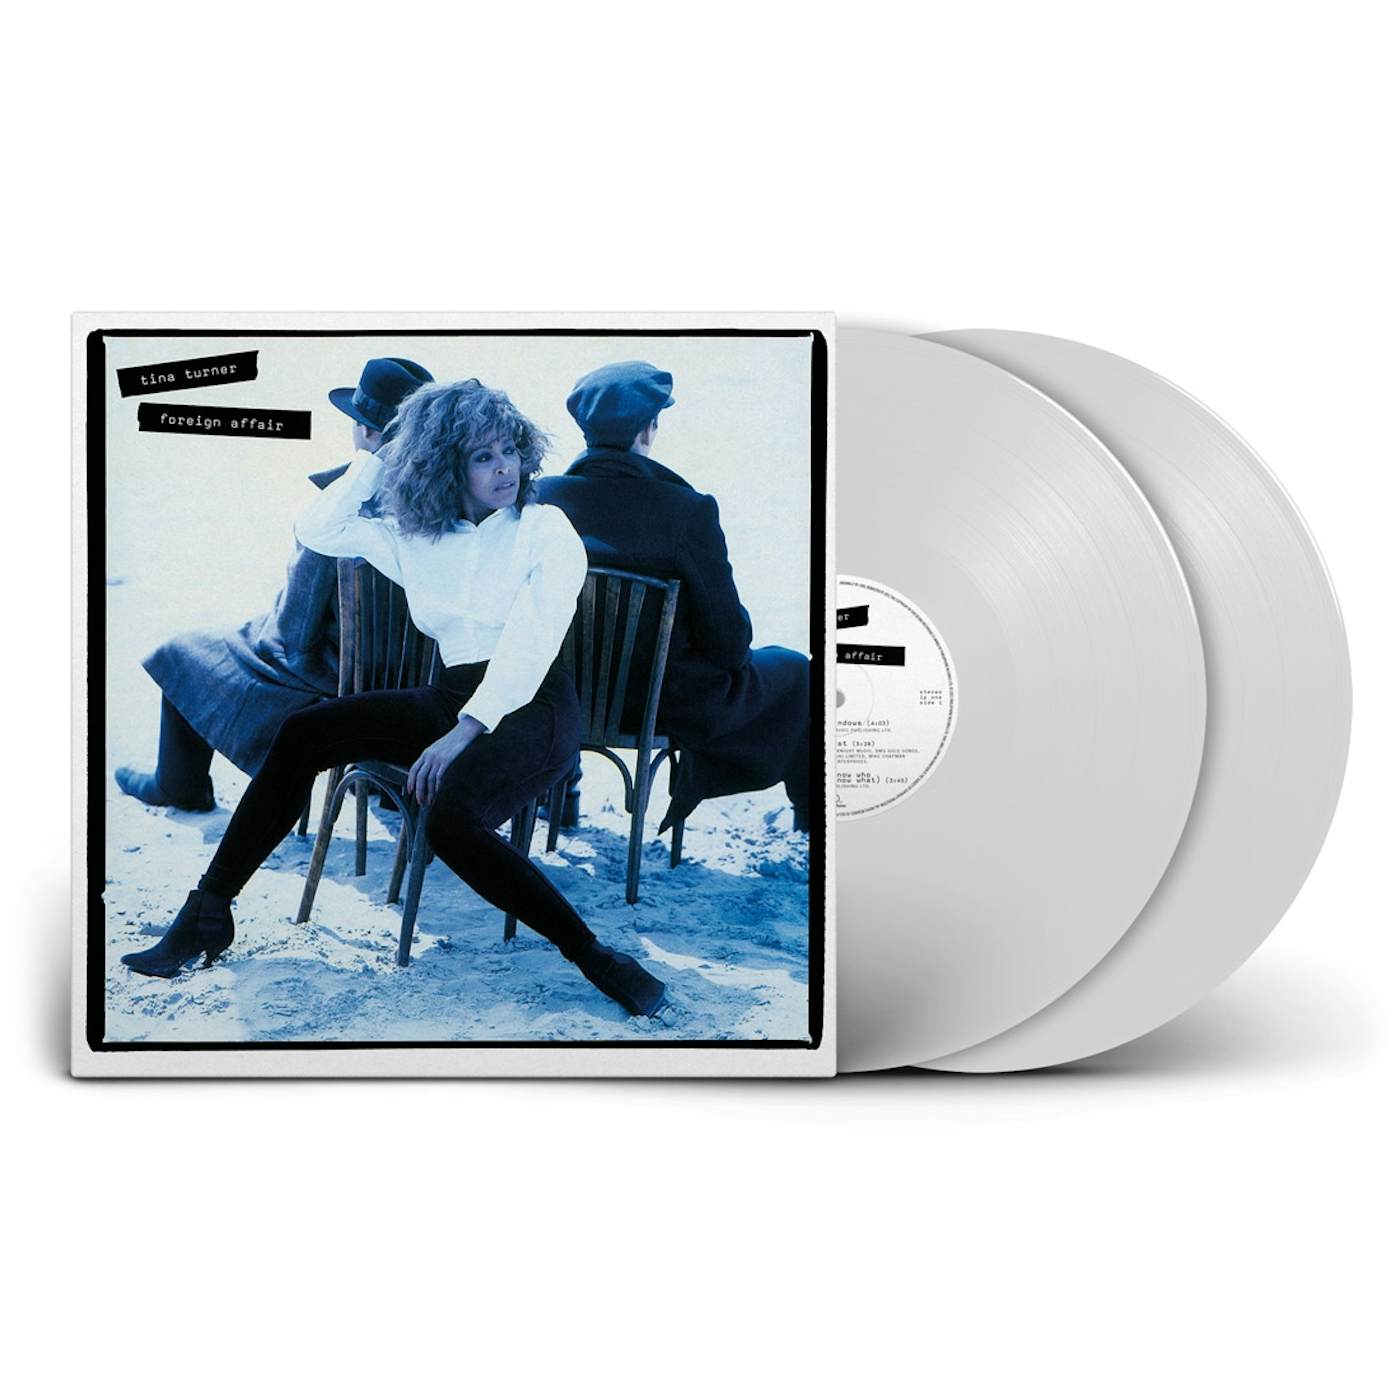 Tina Turner Foreign Affair (2LP White) [2021 Remaster] (Vinyl)